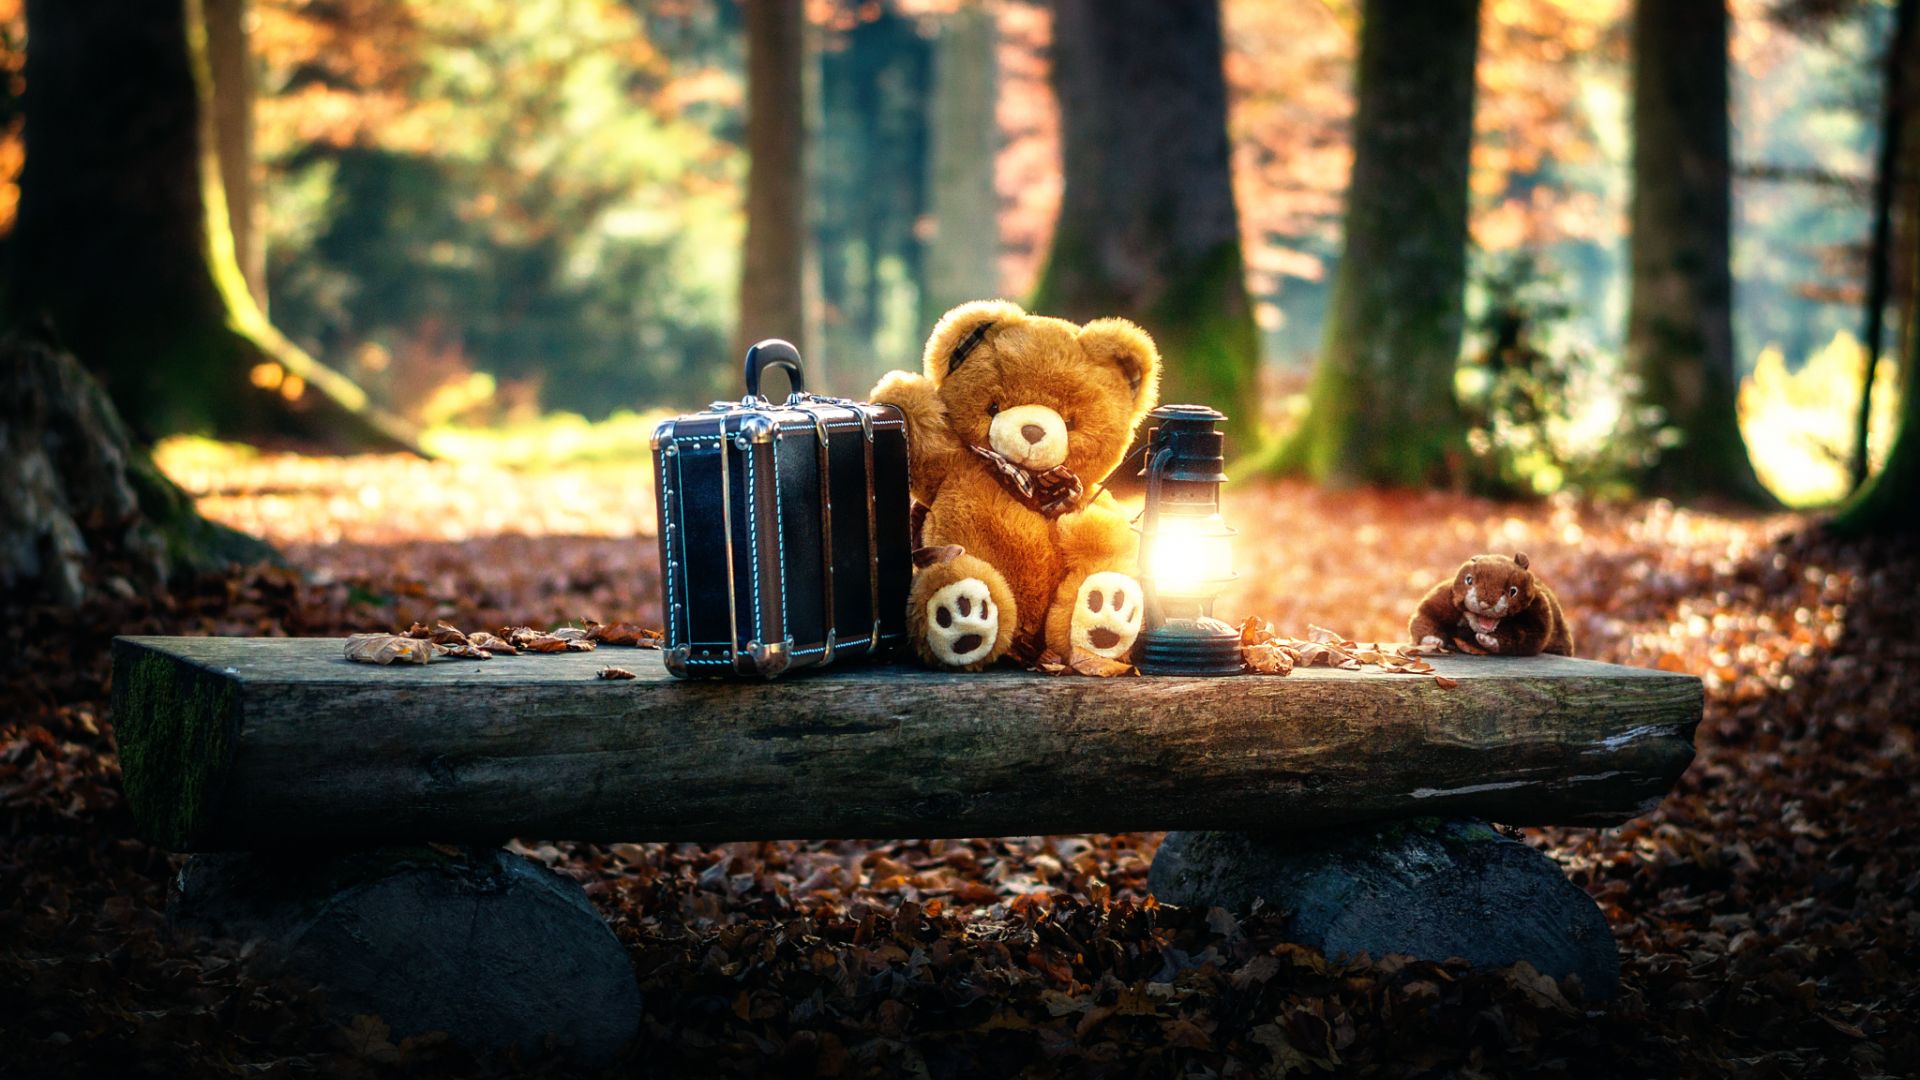 Wallpaper Teddy bear, lamp, suitcase, bench